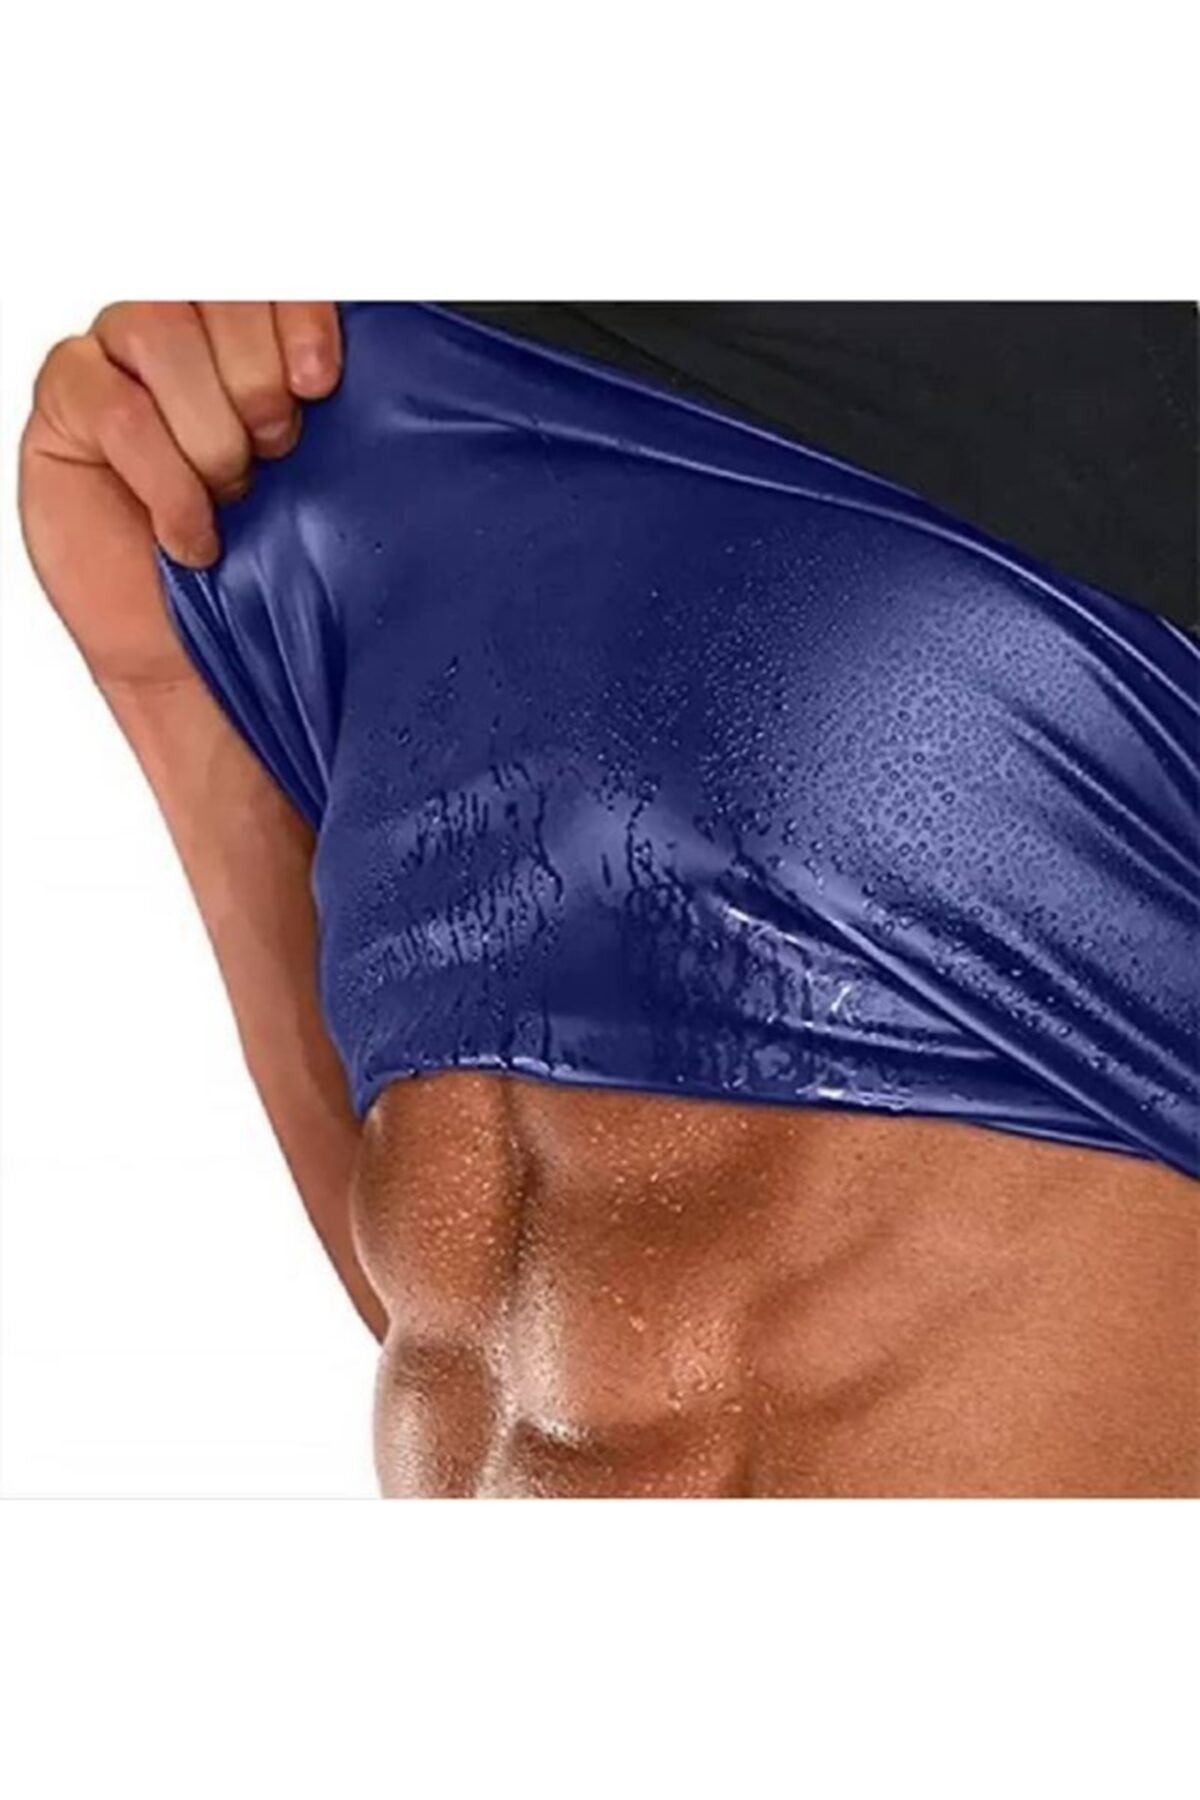 EZRA Men's Thermal Sauna Undershirt - Sauna Effect Sweating